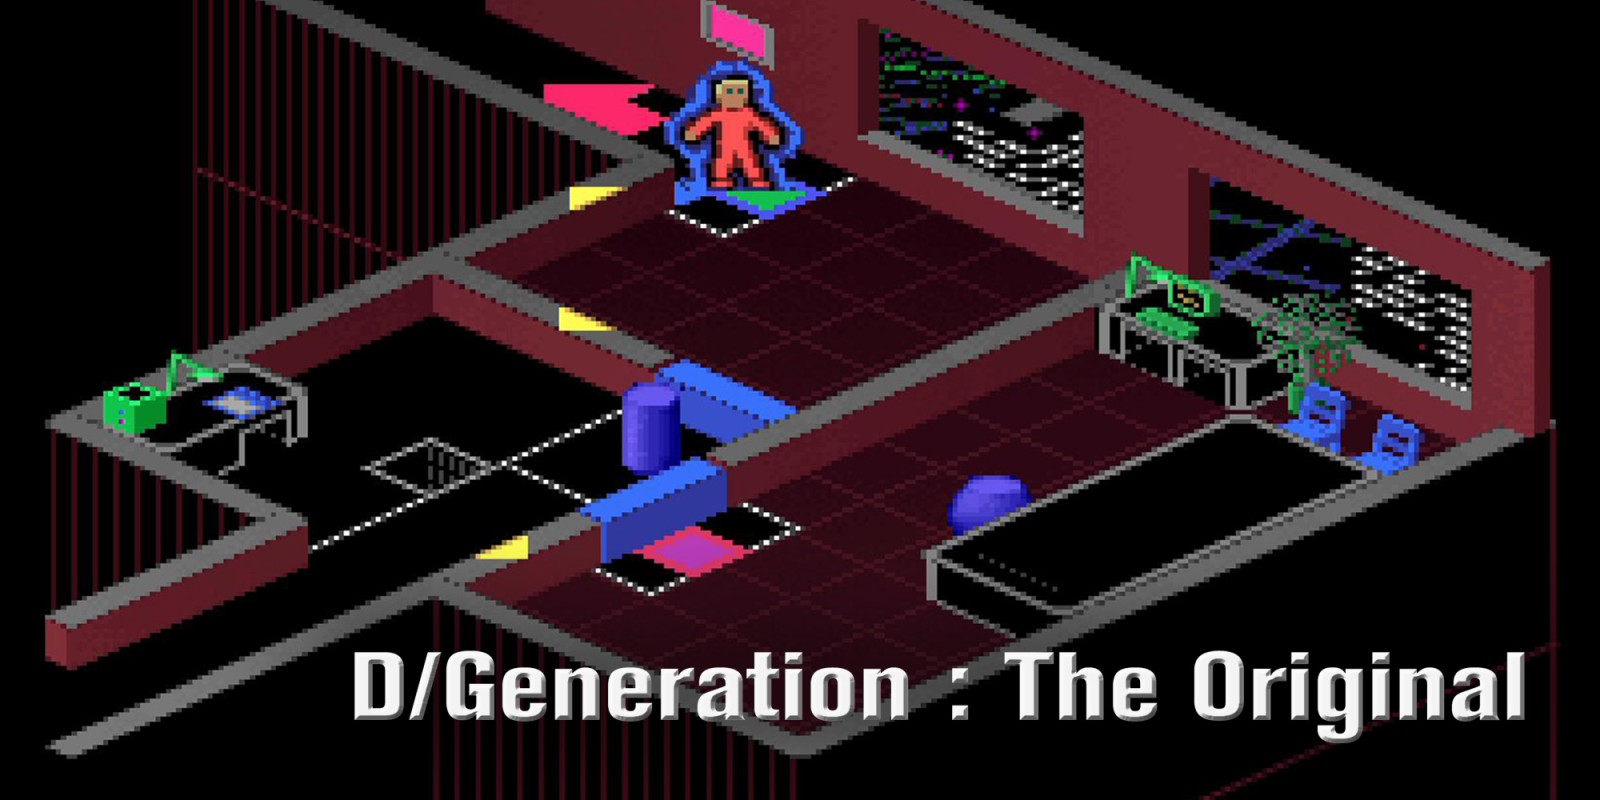 D/Generation : The Original